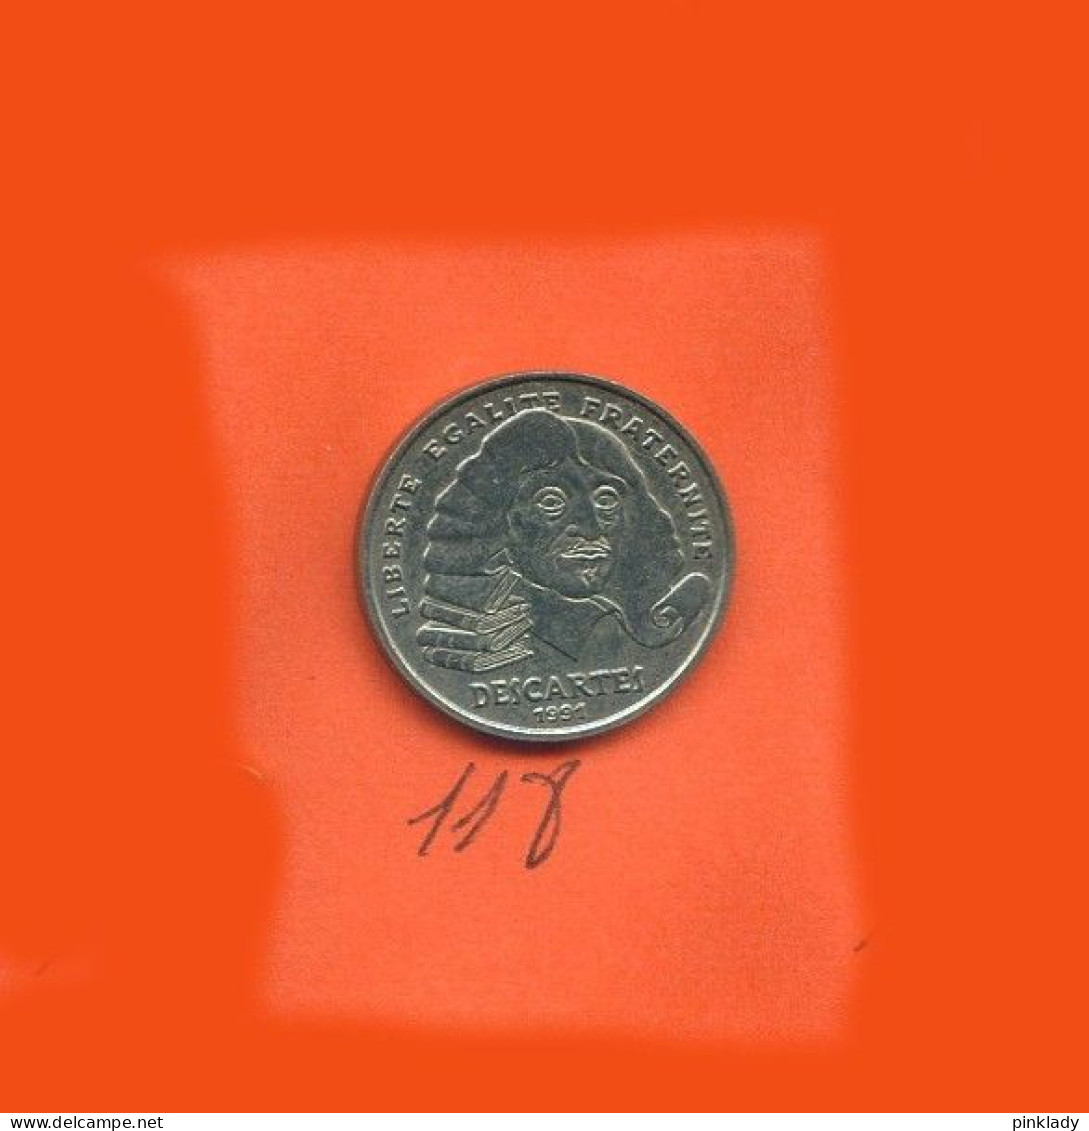 Rare Pins En Forme De Piece De Monnaie Descartes B118 - Berühmte Personen